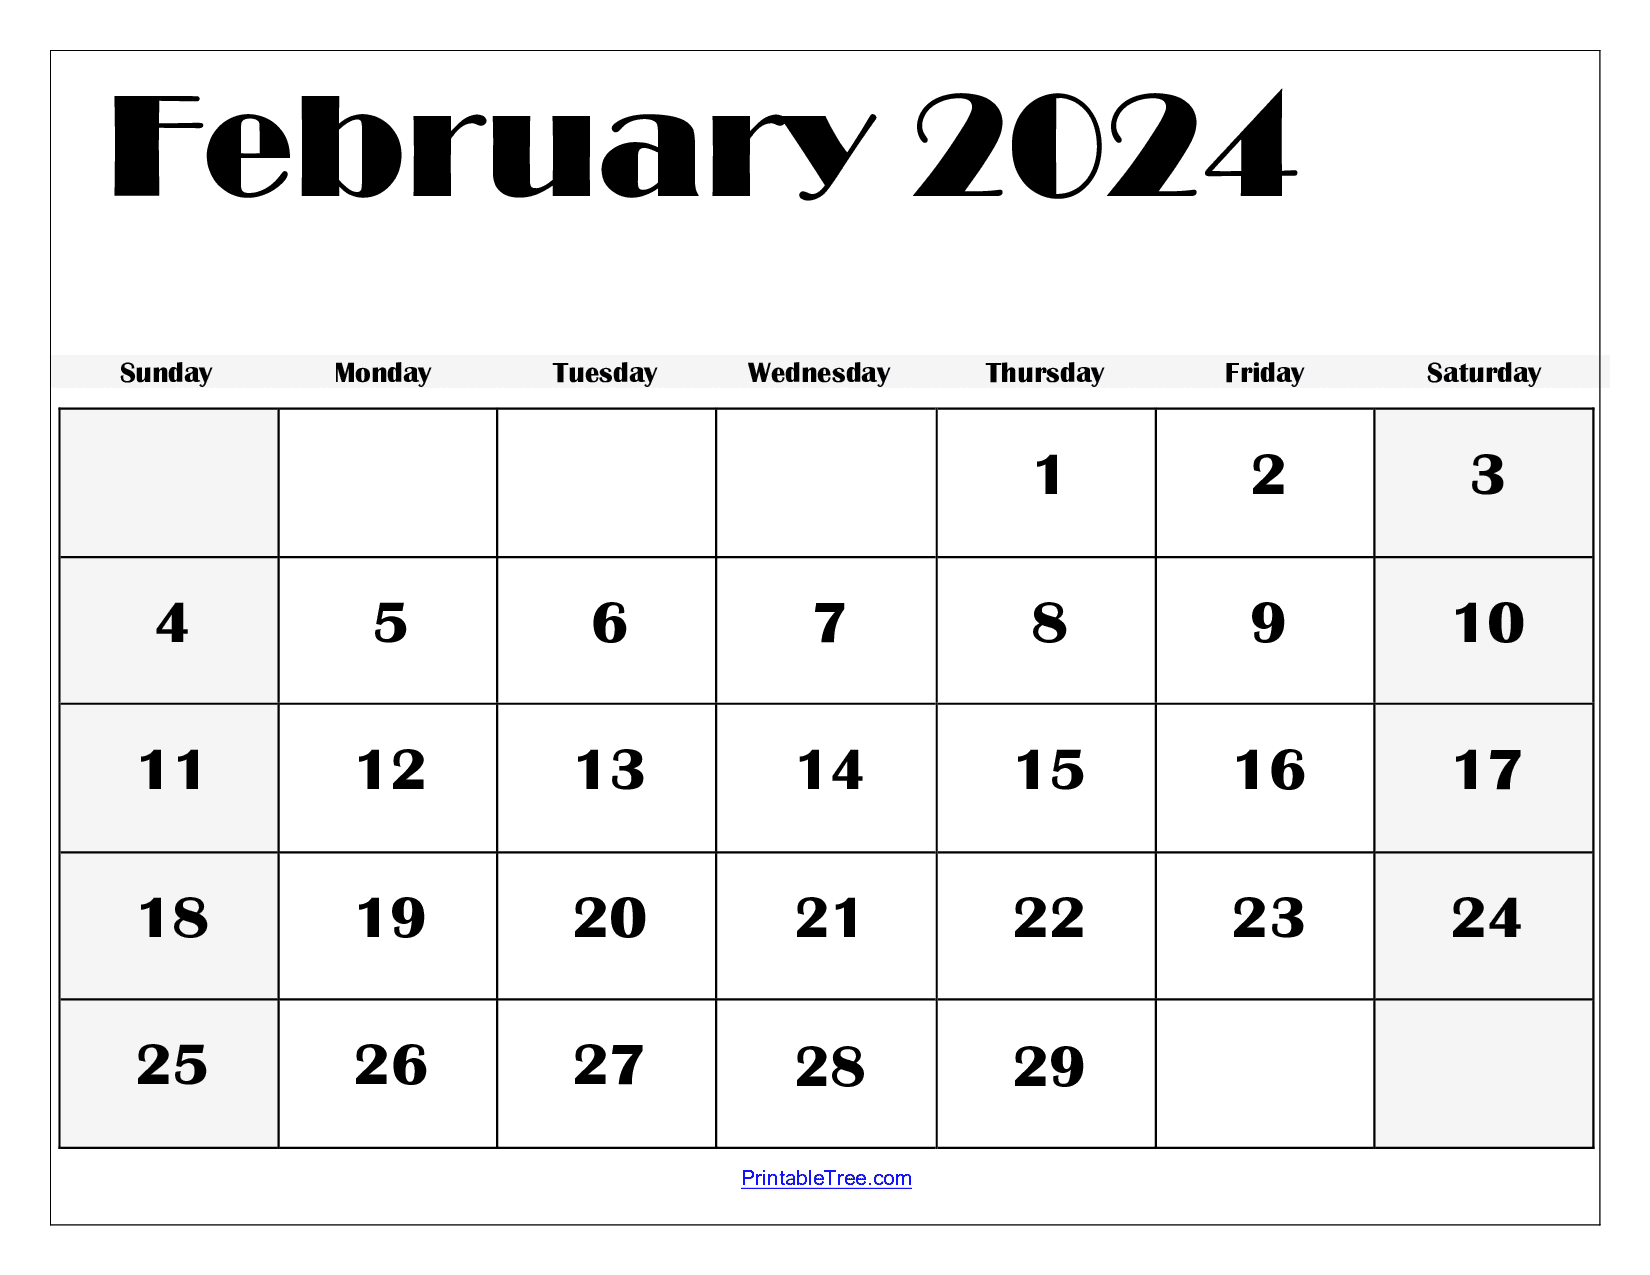 February 2024 Calendar Printable Pdf Template With Holidays for Monthly Printable Calendar February 2024